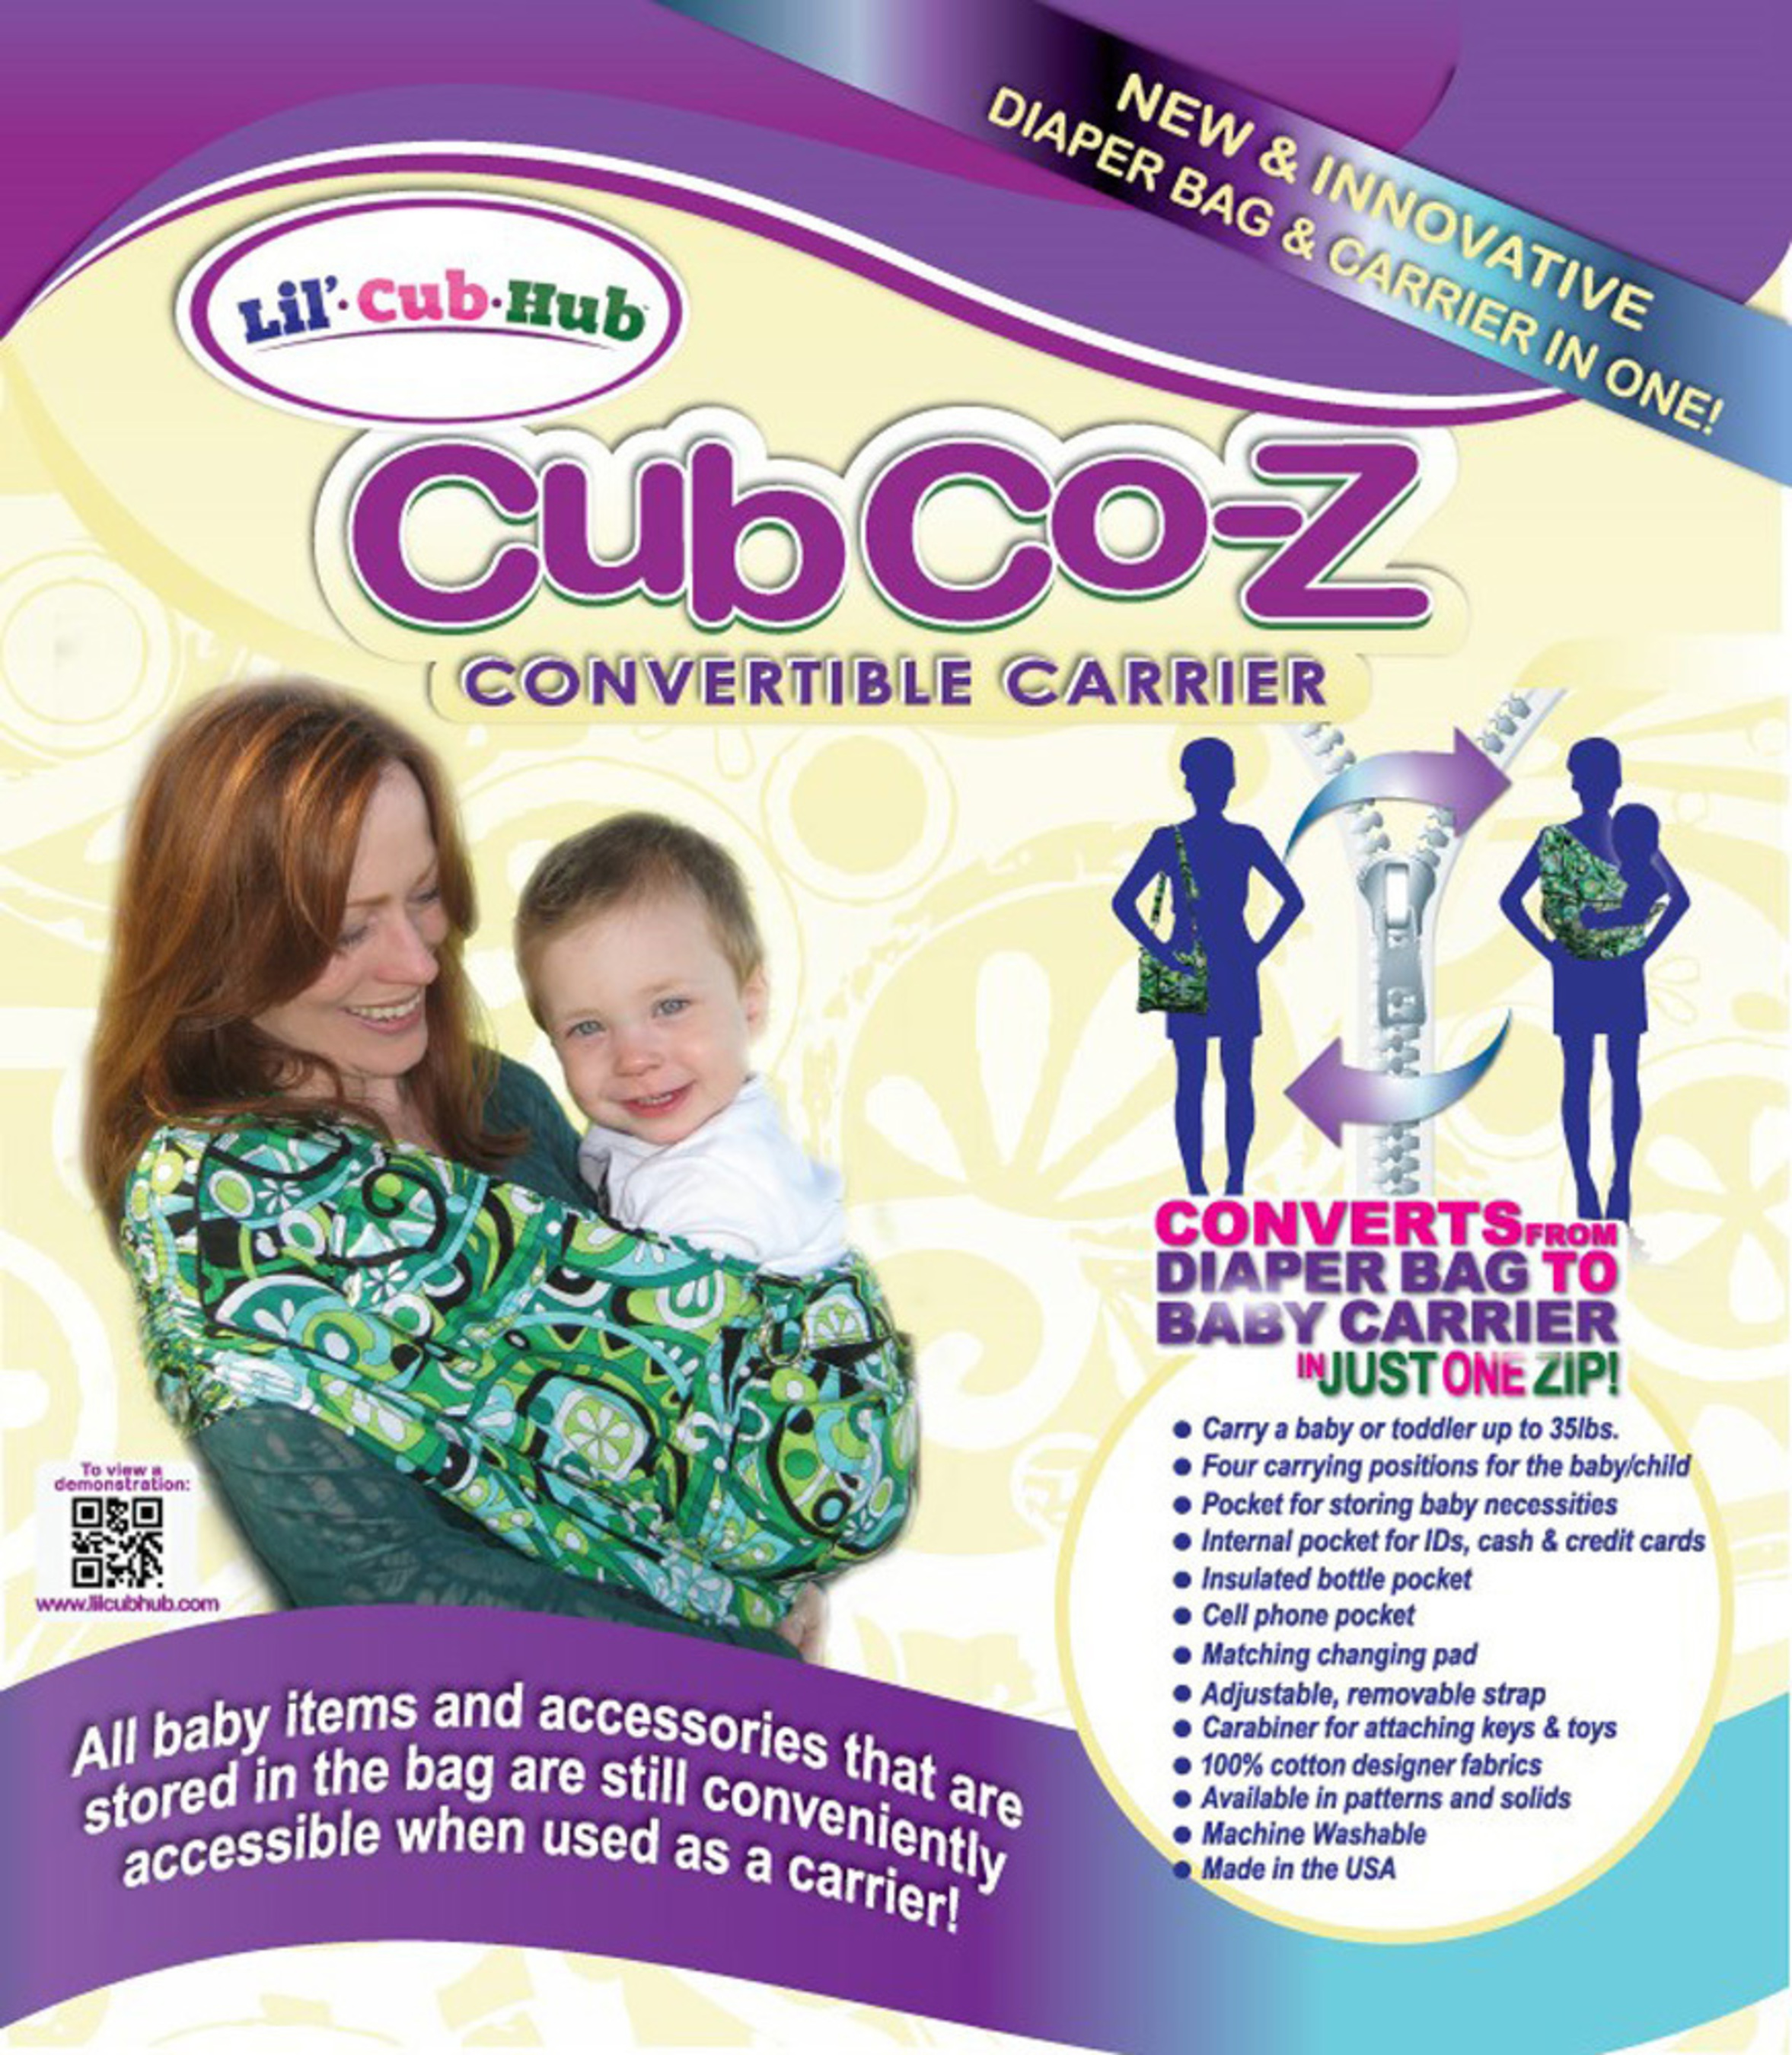 Cub Co-Z Convertible Carrier (PRNewsFoto/Heather Sonnenberg)